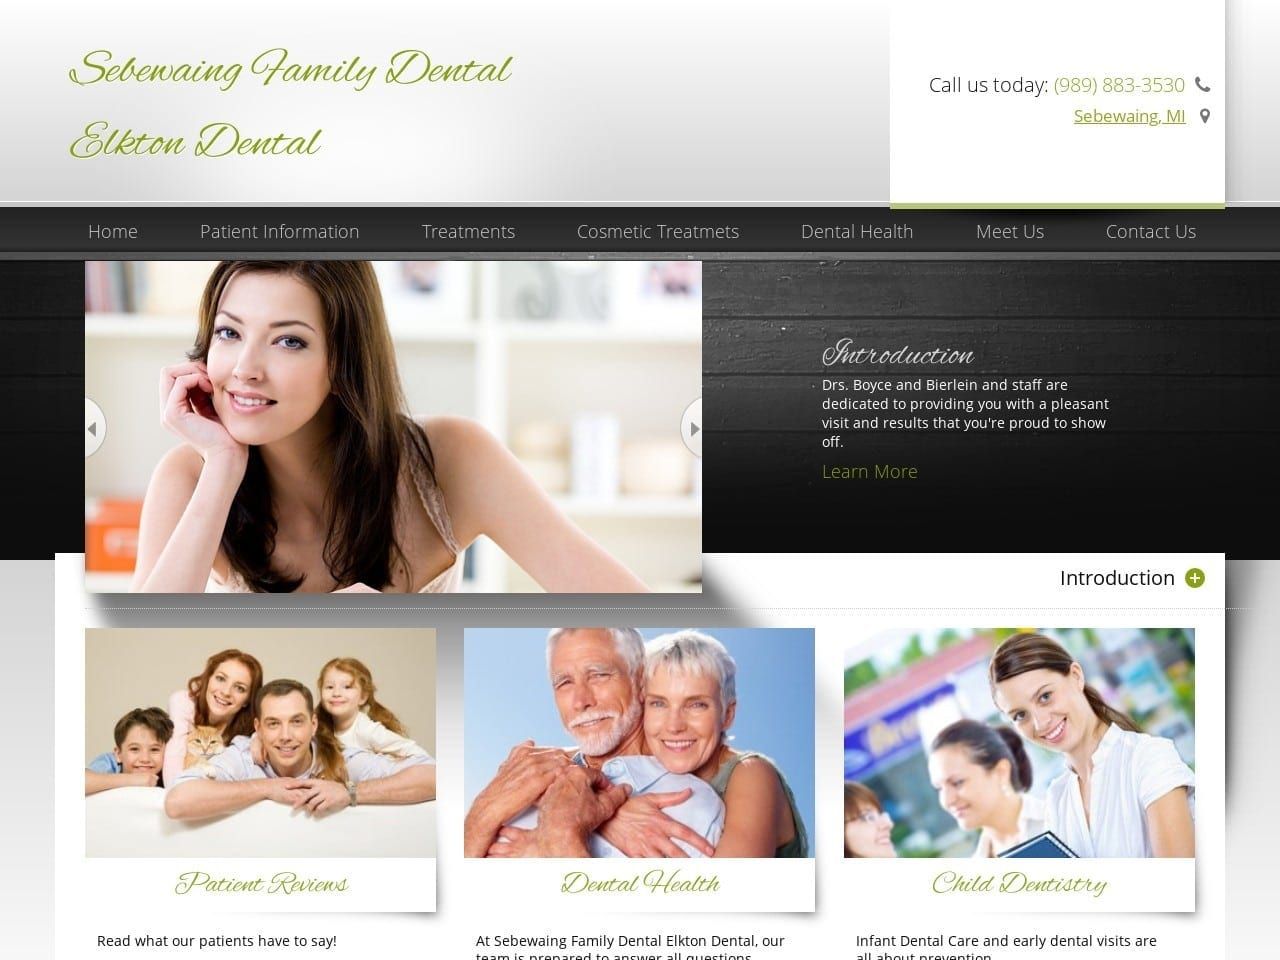 Sebewaing Family Dental Center Website Screenshot from sebewaingfamilydental.com